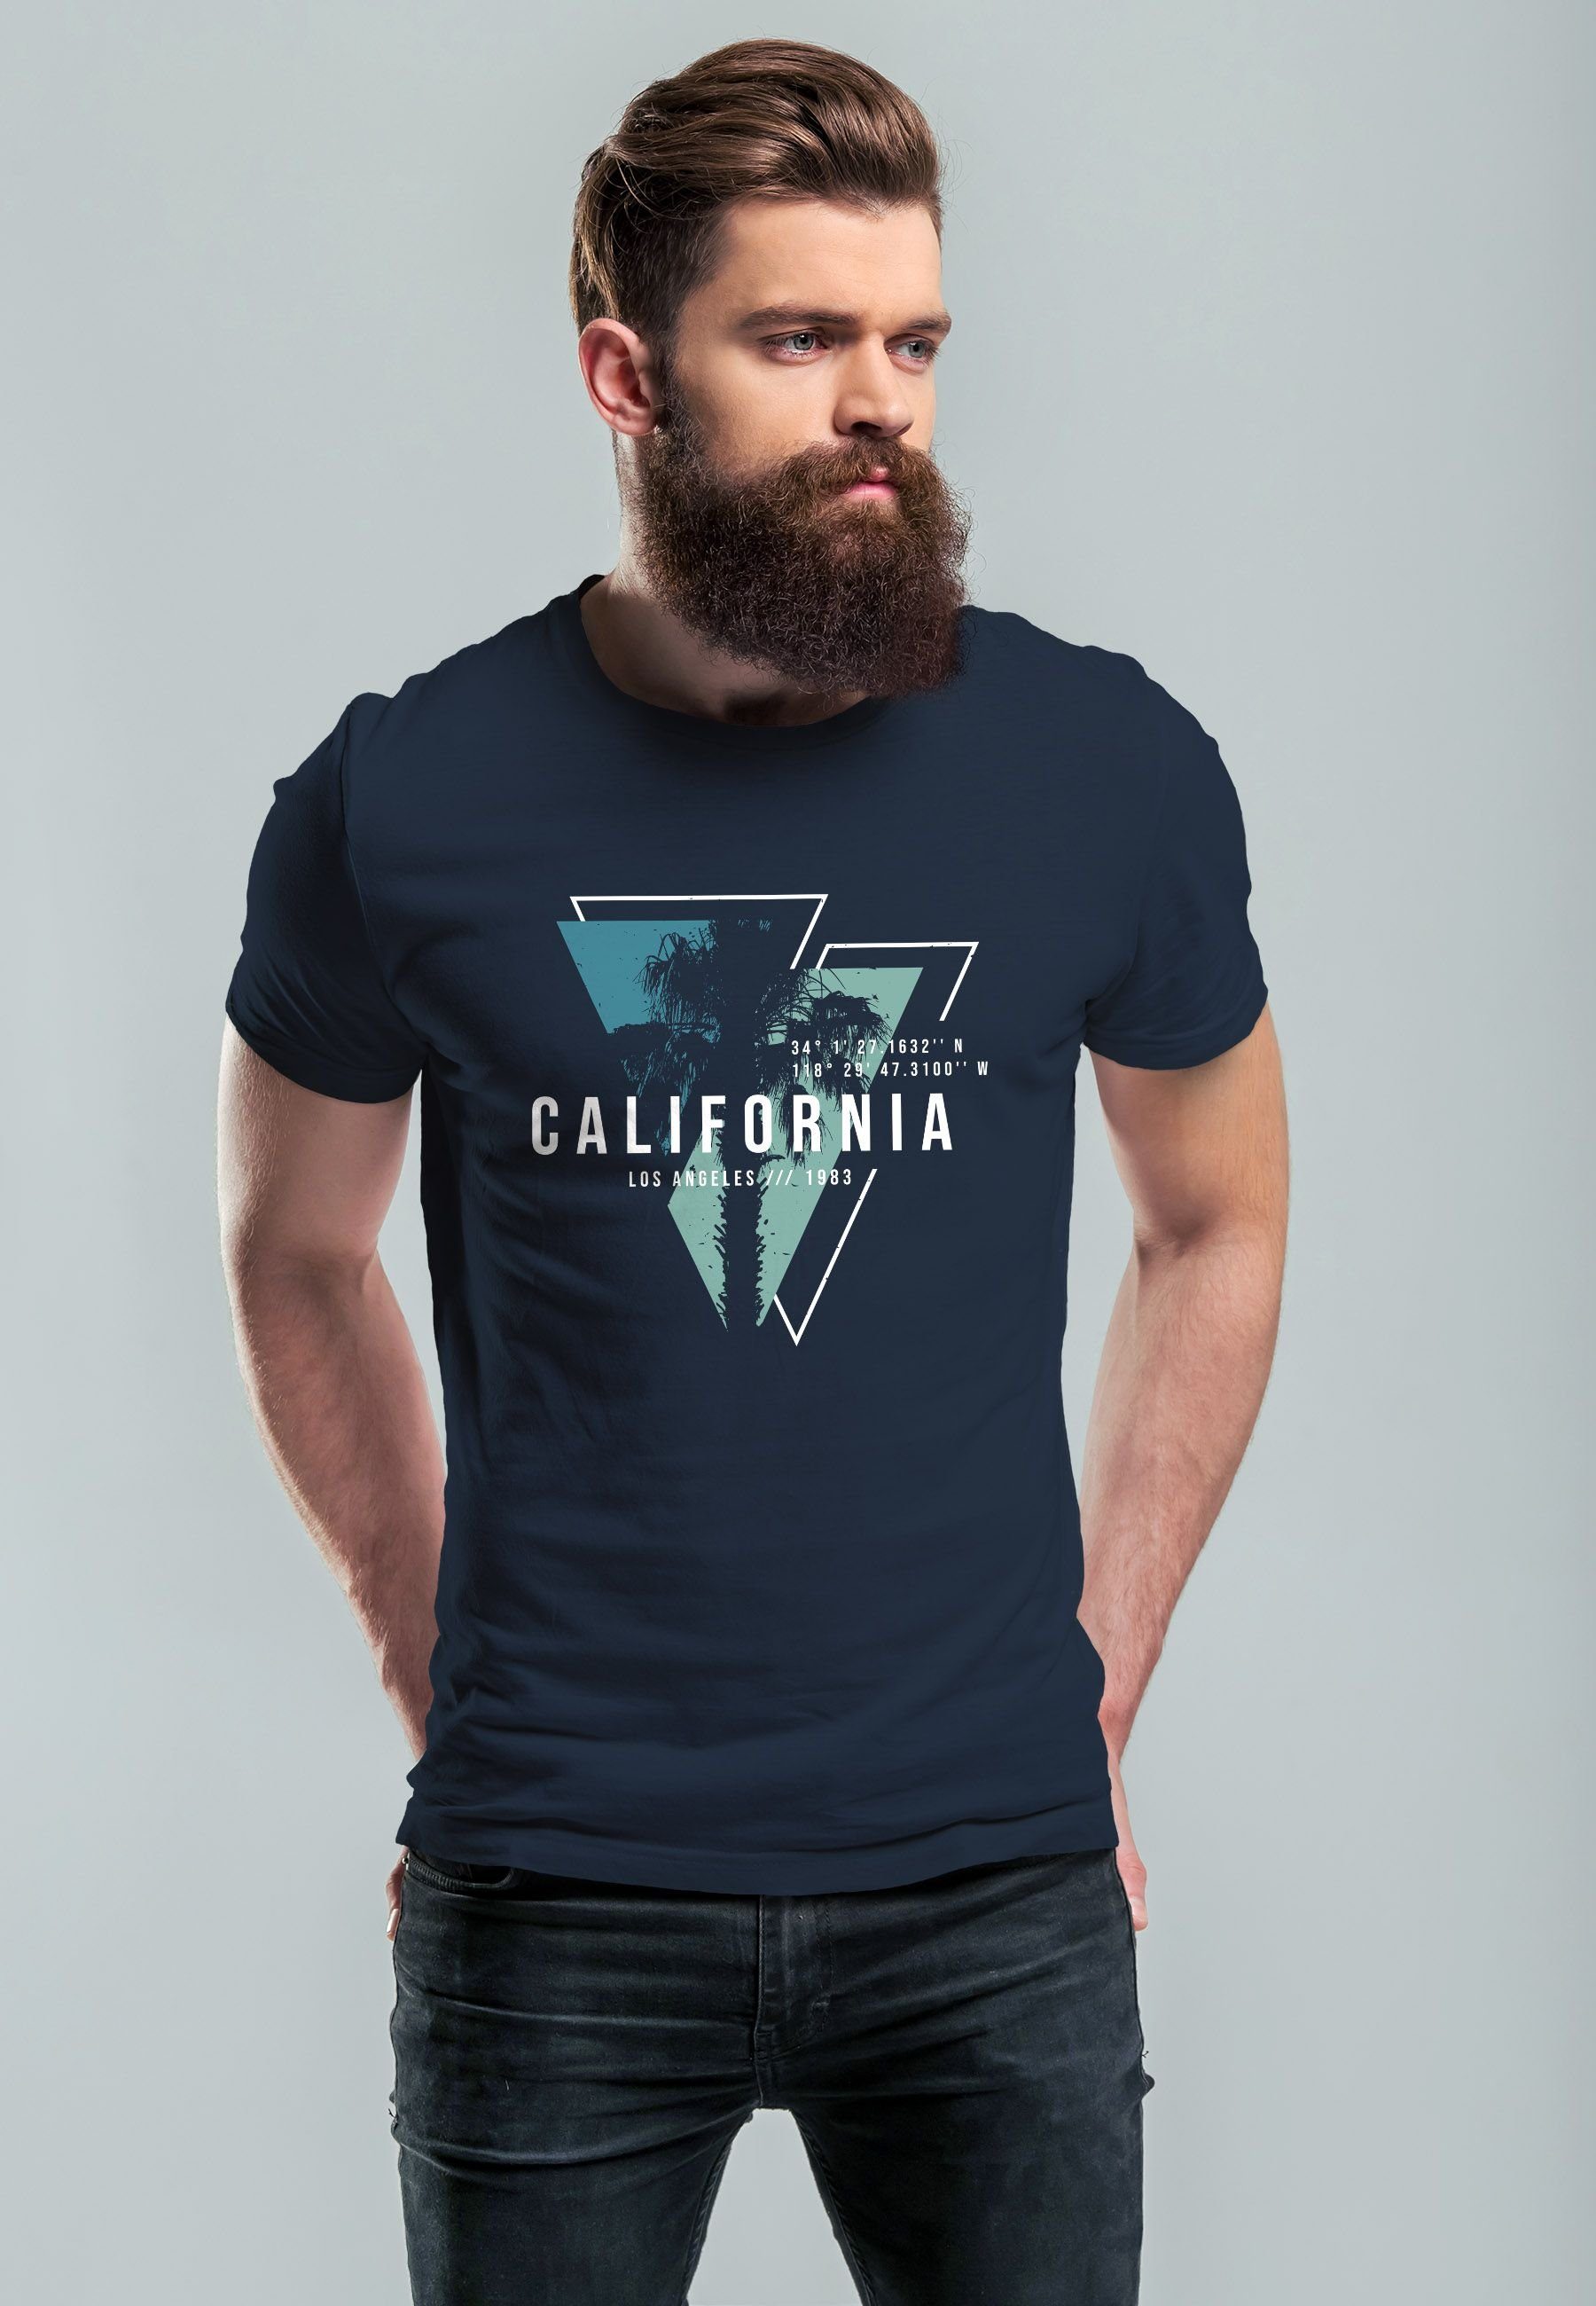 Neverless Print-Shirt Herren T-Shirt California mit Sommer Surfing USA Motiv navy-blau Los Print Angeles Fashion